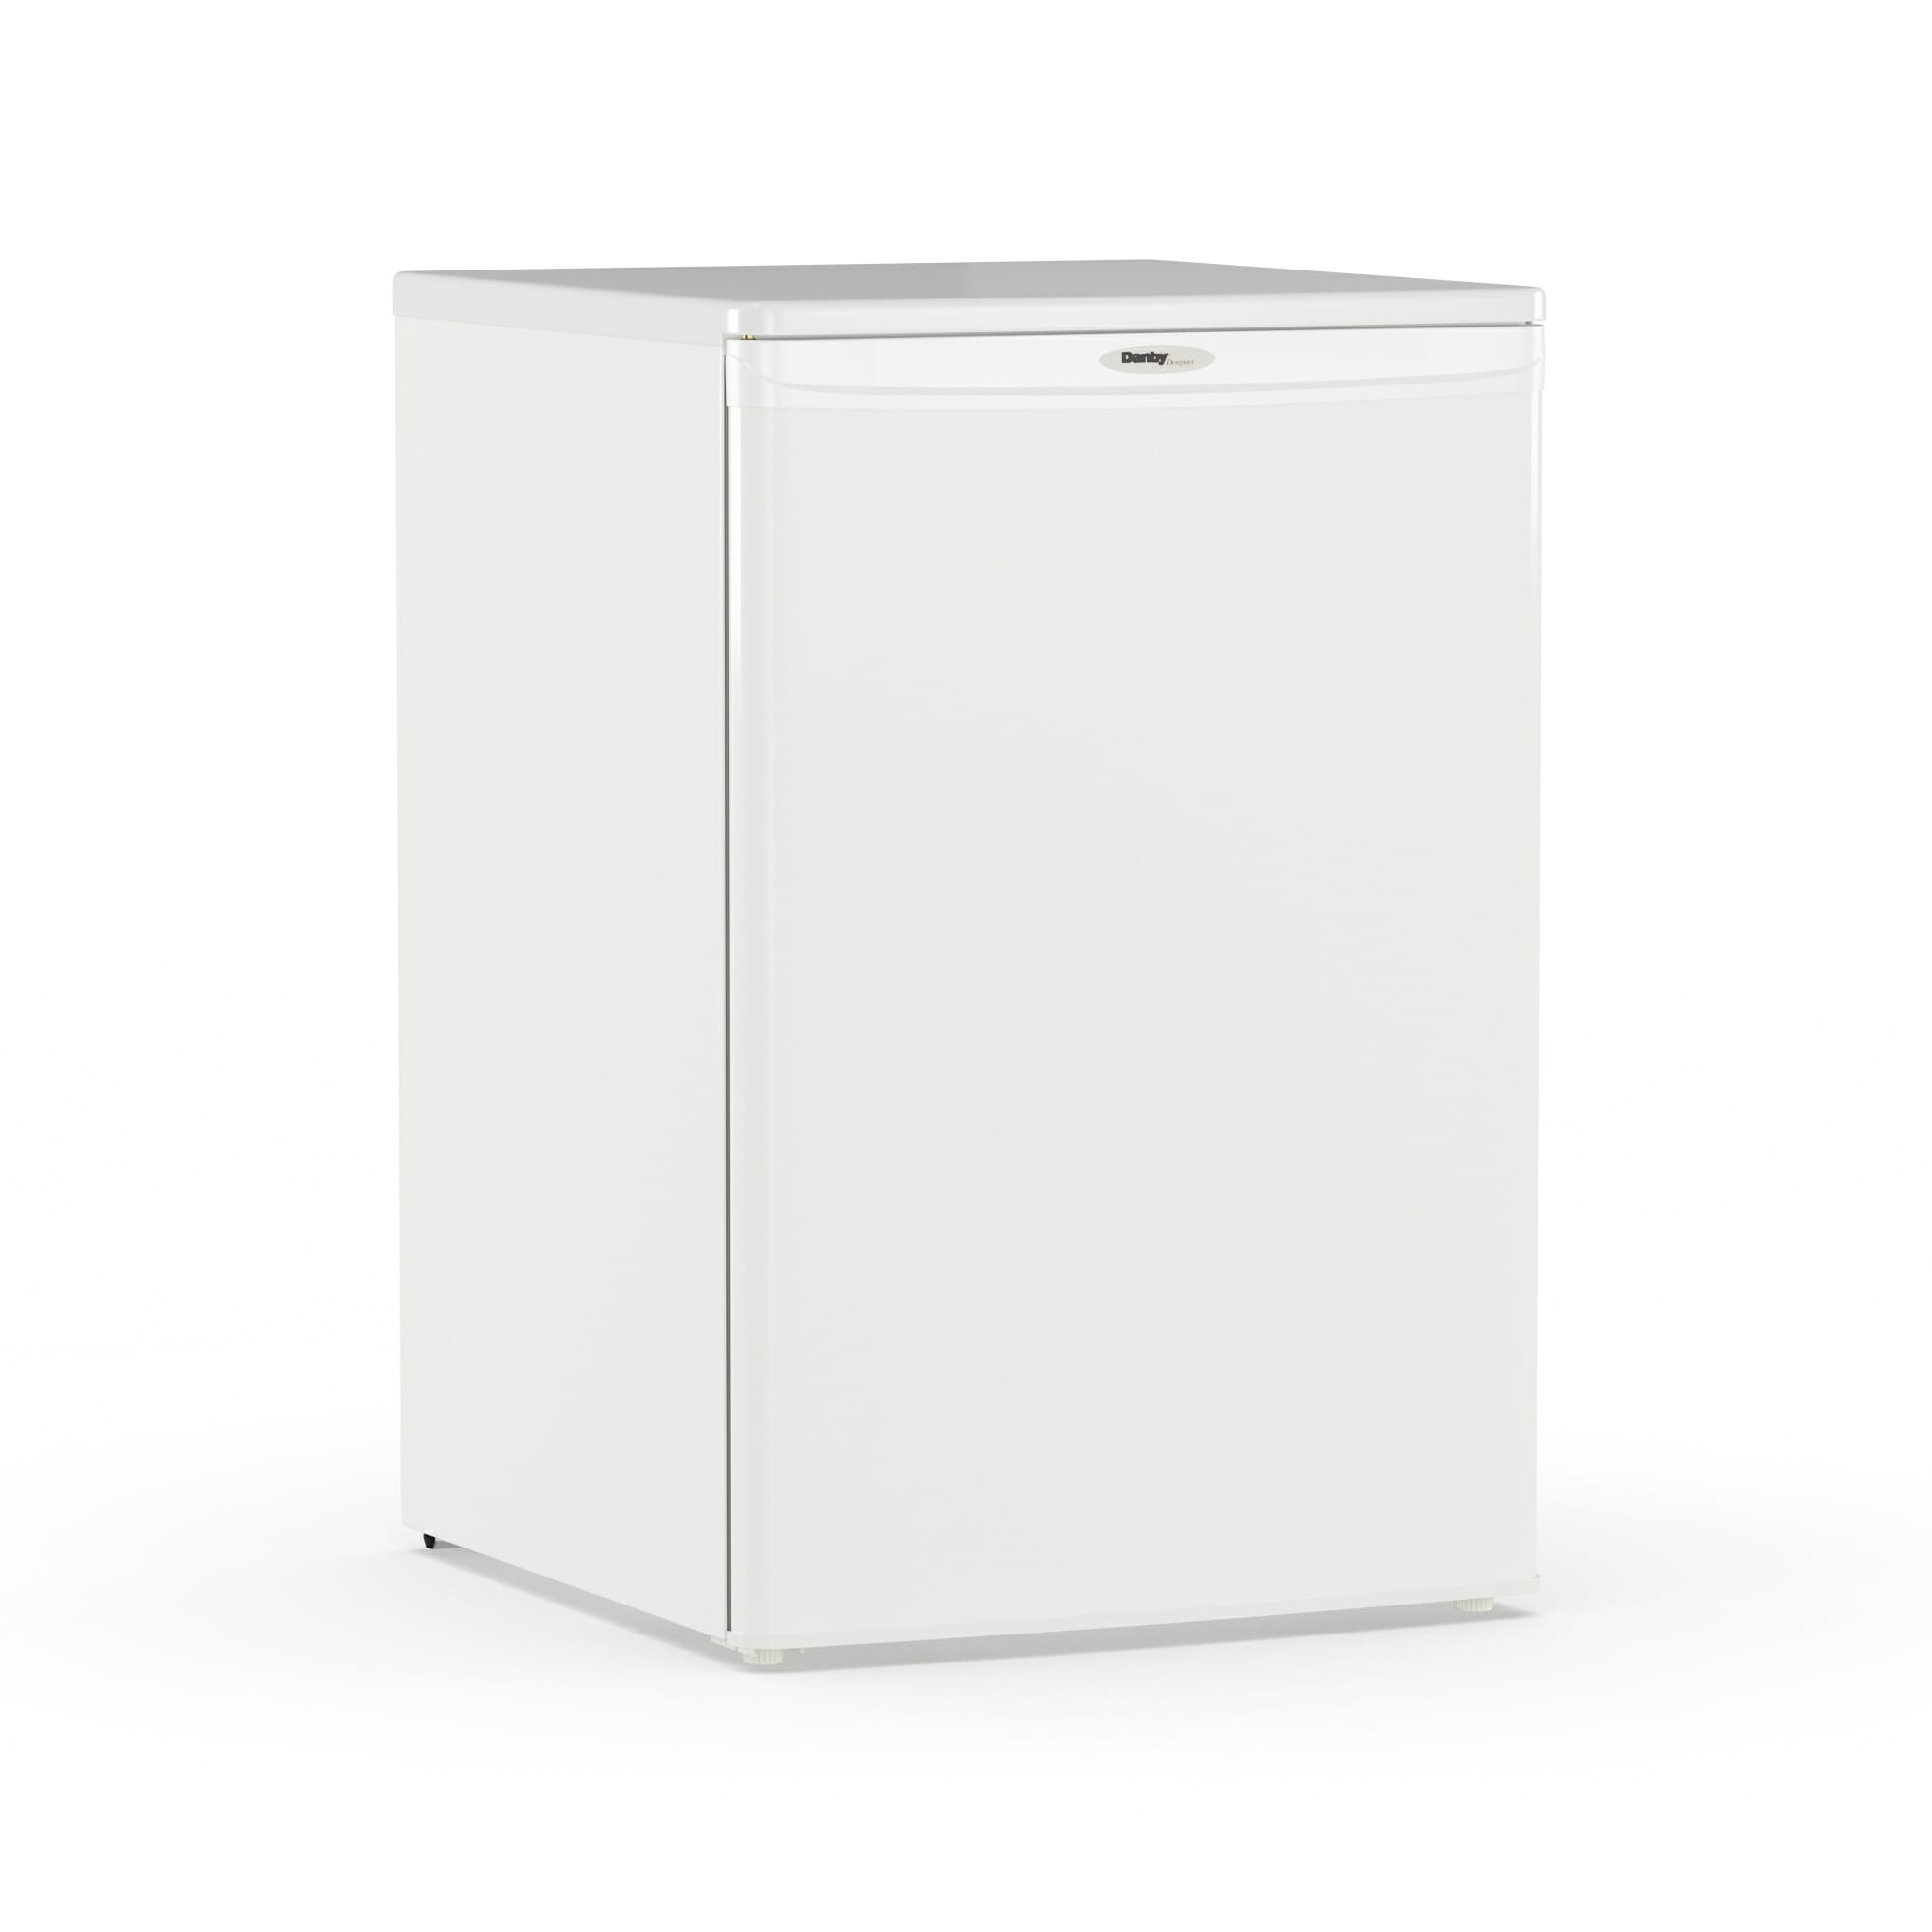 Danby Designer 4.3 cu. ft. Upright Freezer in White